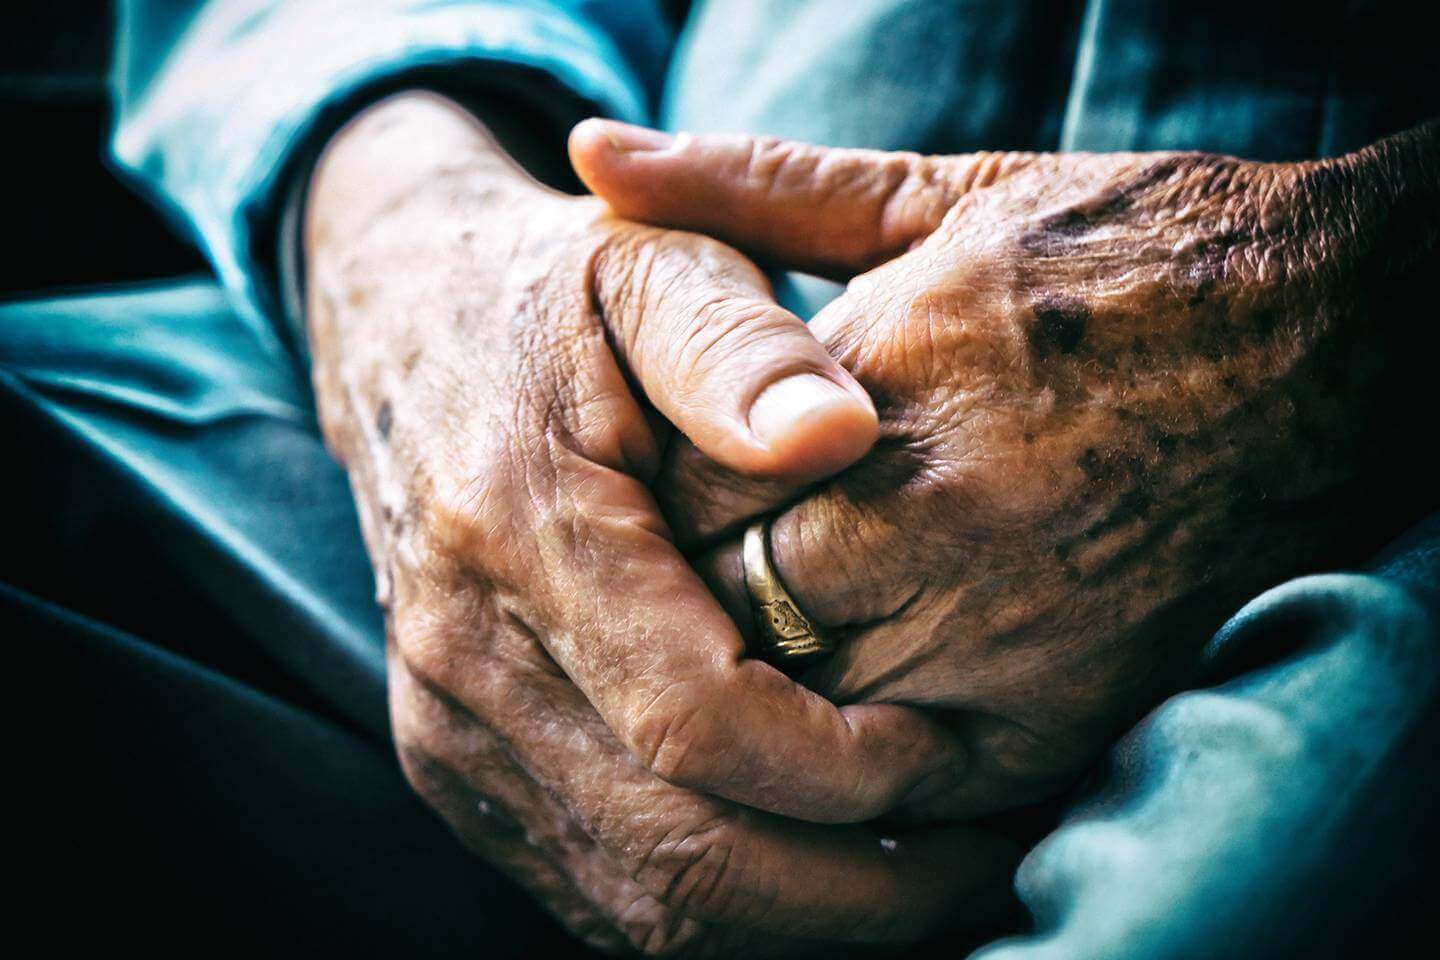 Elderly population and social responsibilities